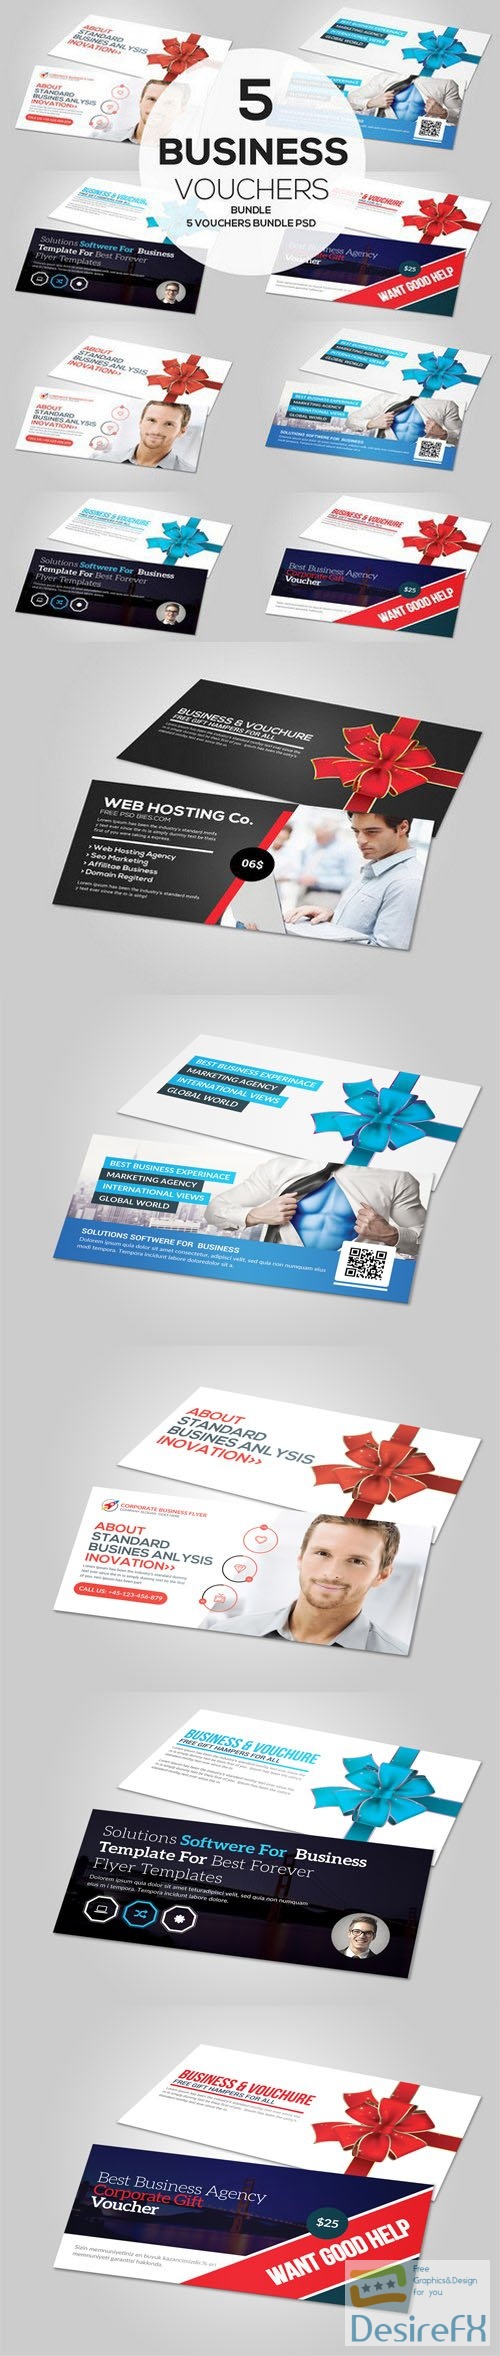 5 Business Vouchers Bundle - Gift Cards PSD Mockups Templates